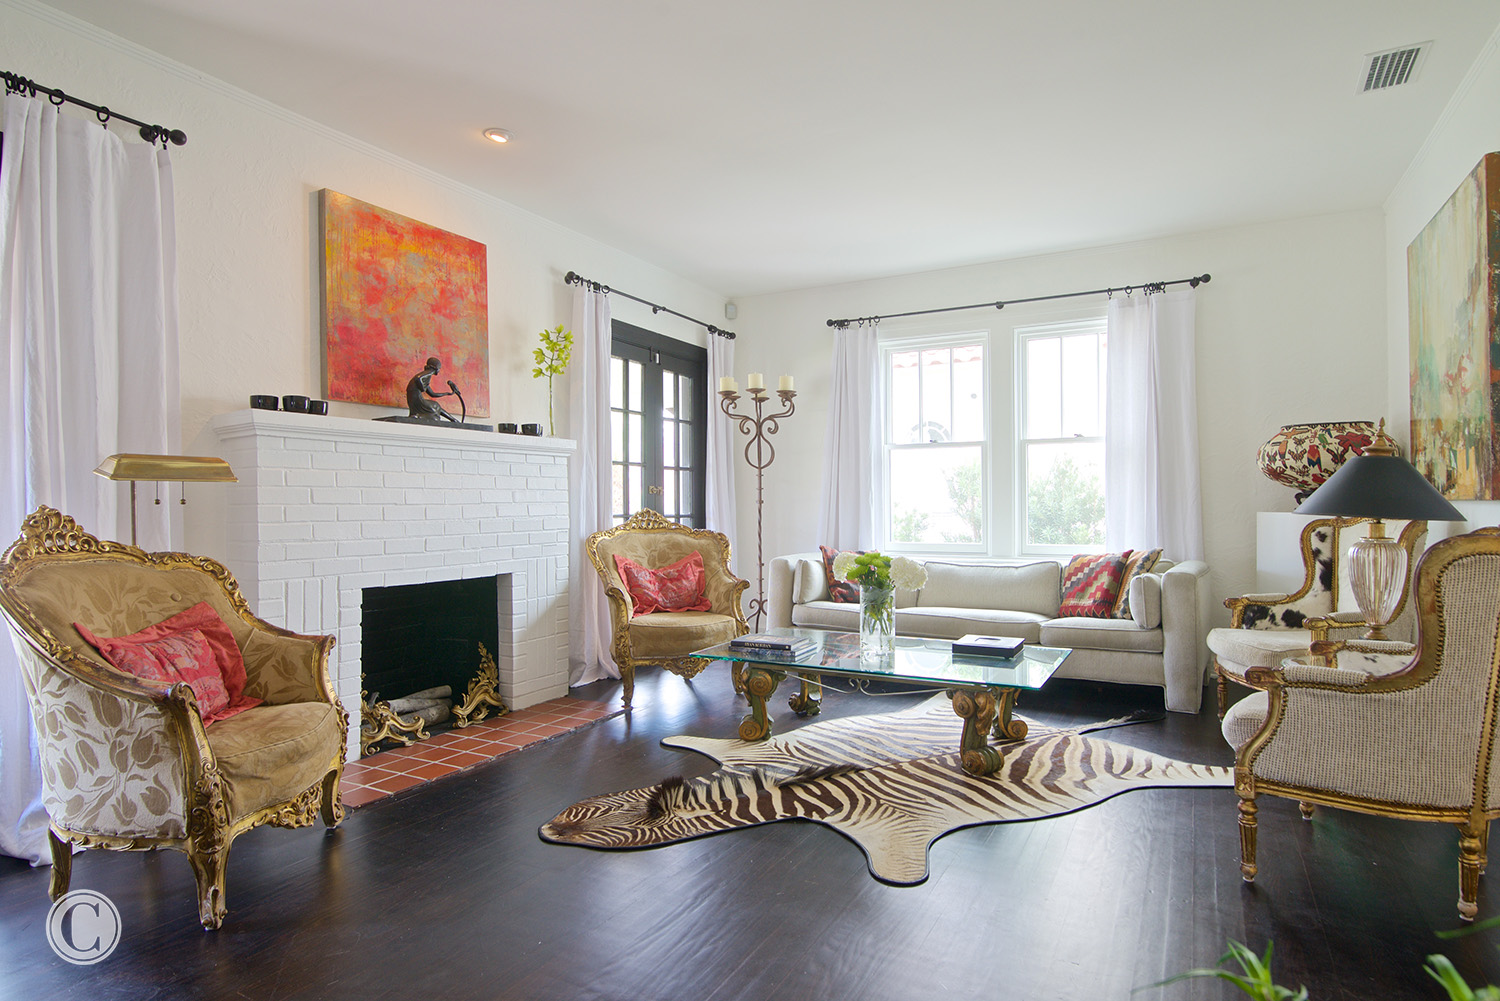 Home renovation – Living Room, San Marco, Jacksonville, FL ©Wally Sears Photography